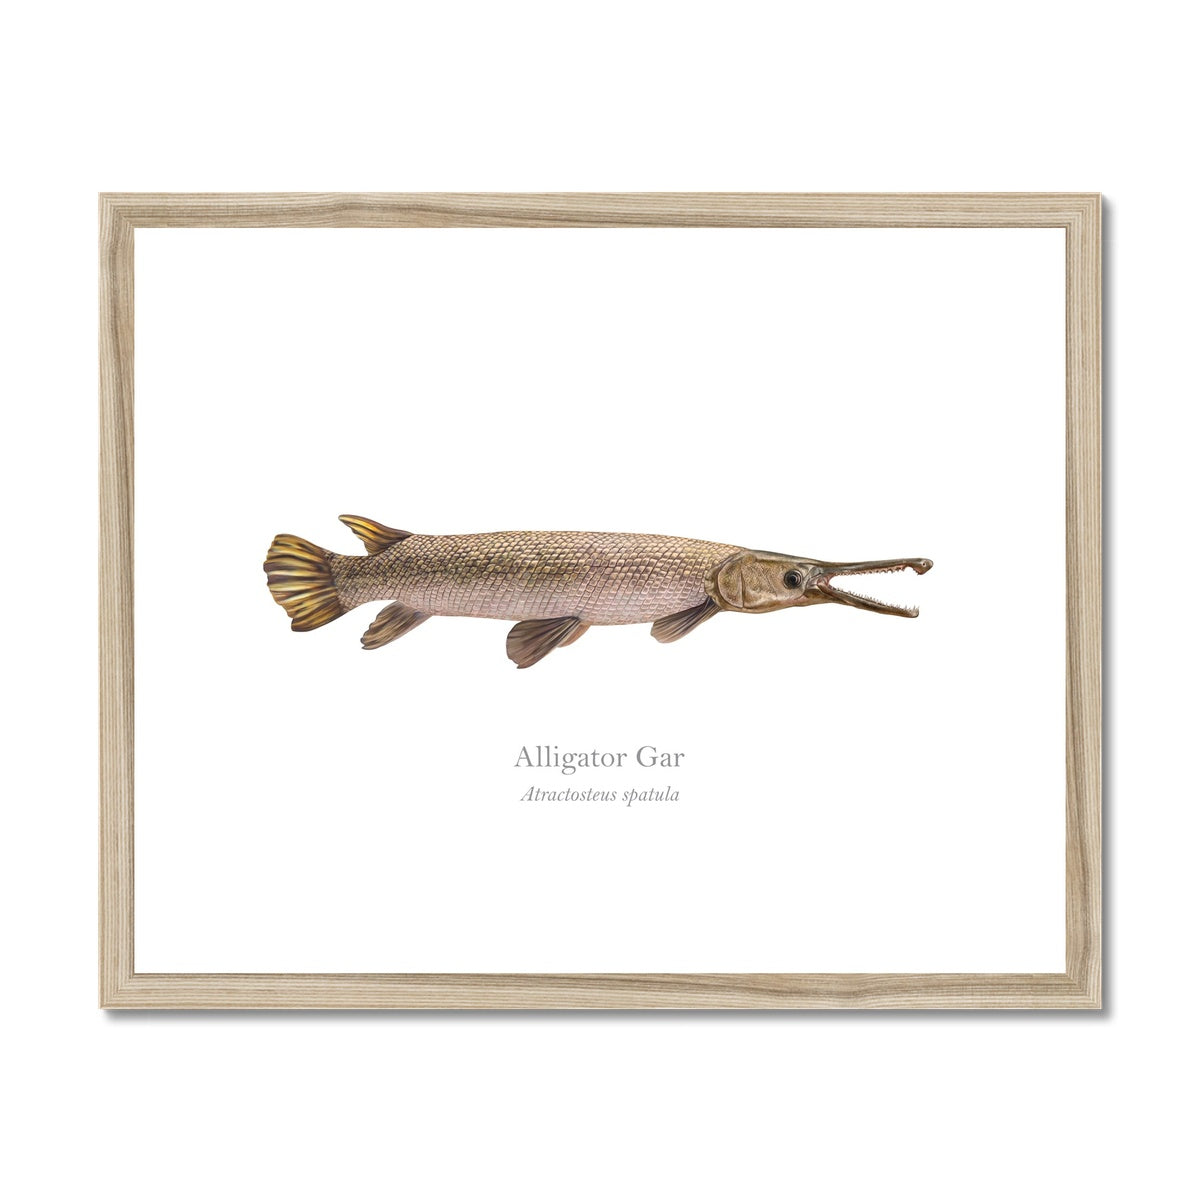 Alligator Gar - Framed & Mounted Print - With Scientific Name